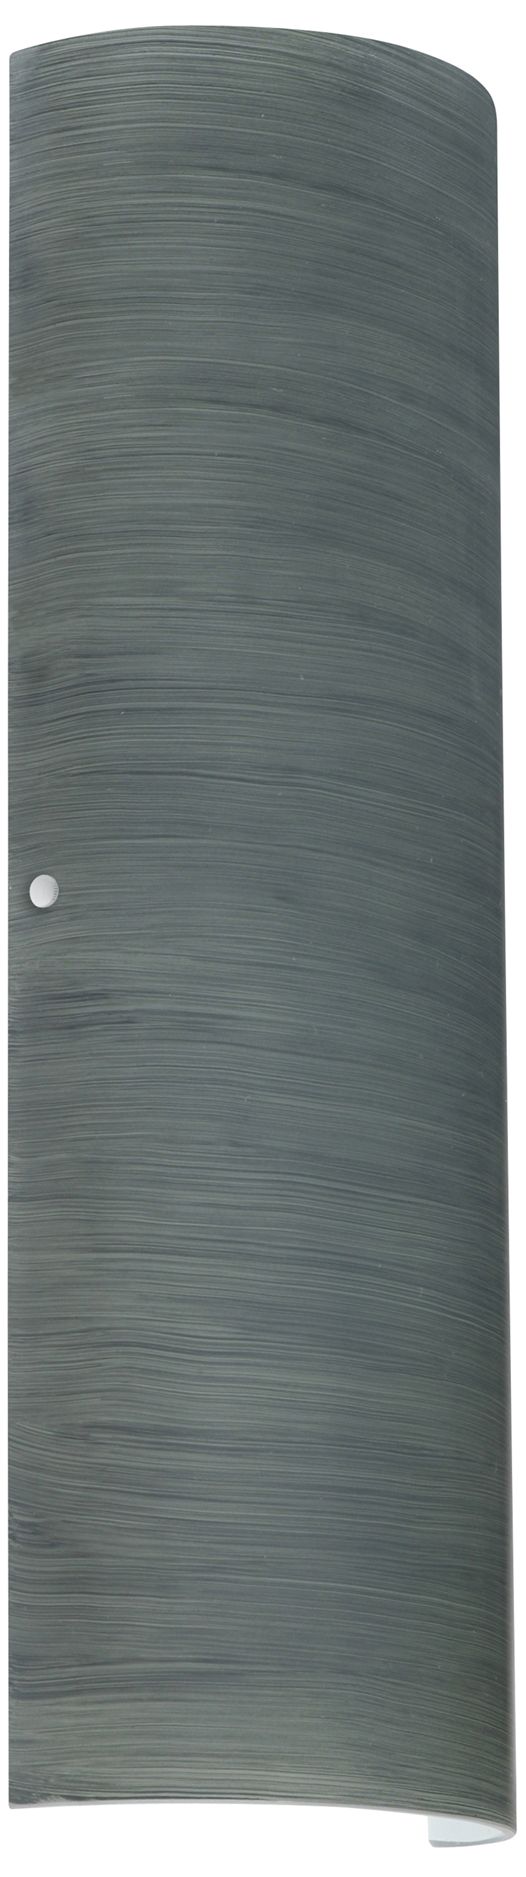 Besa Torre 22 Wall Sconce - Titan decor, Polished Nickel, LED